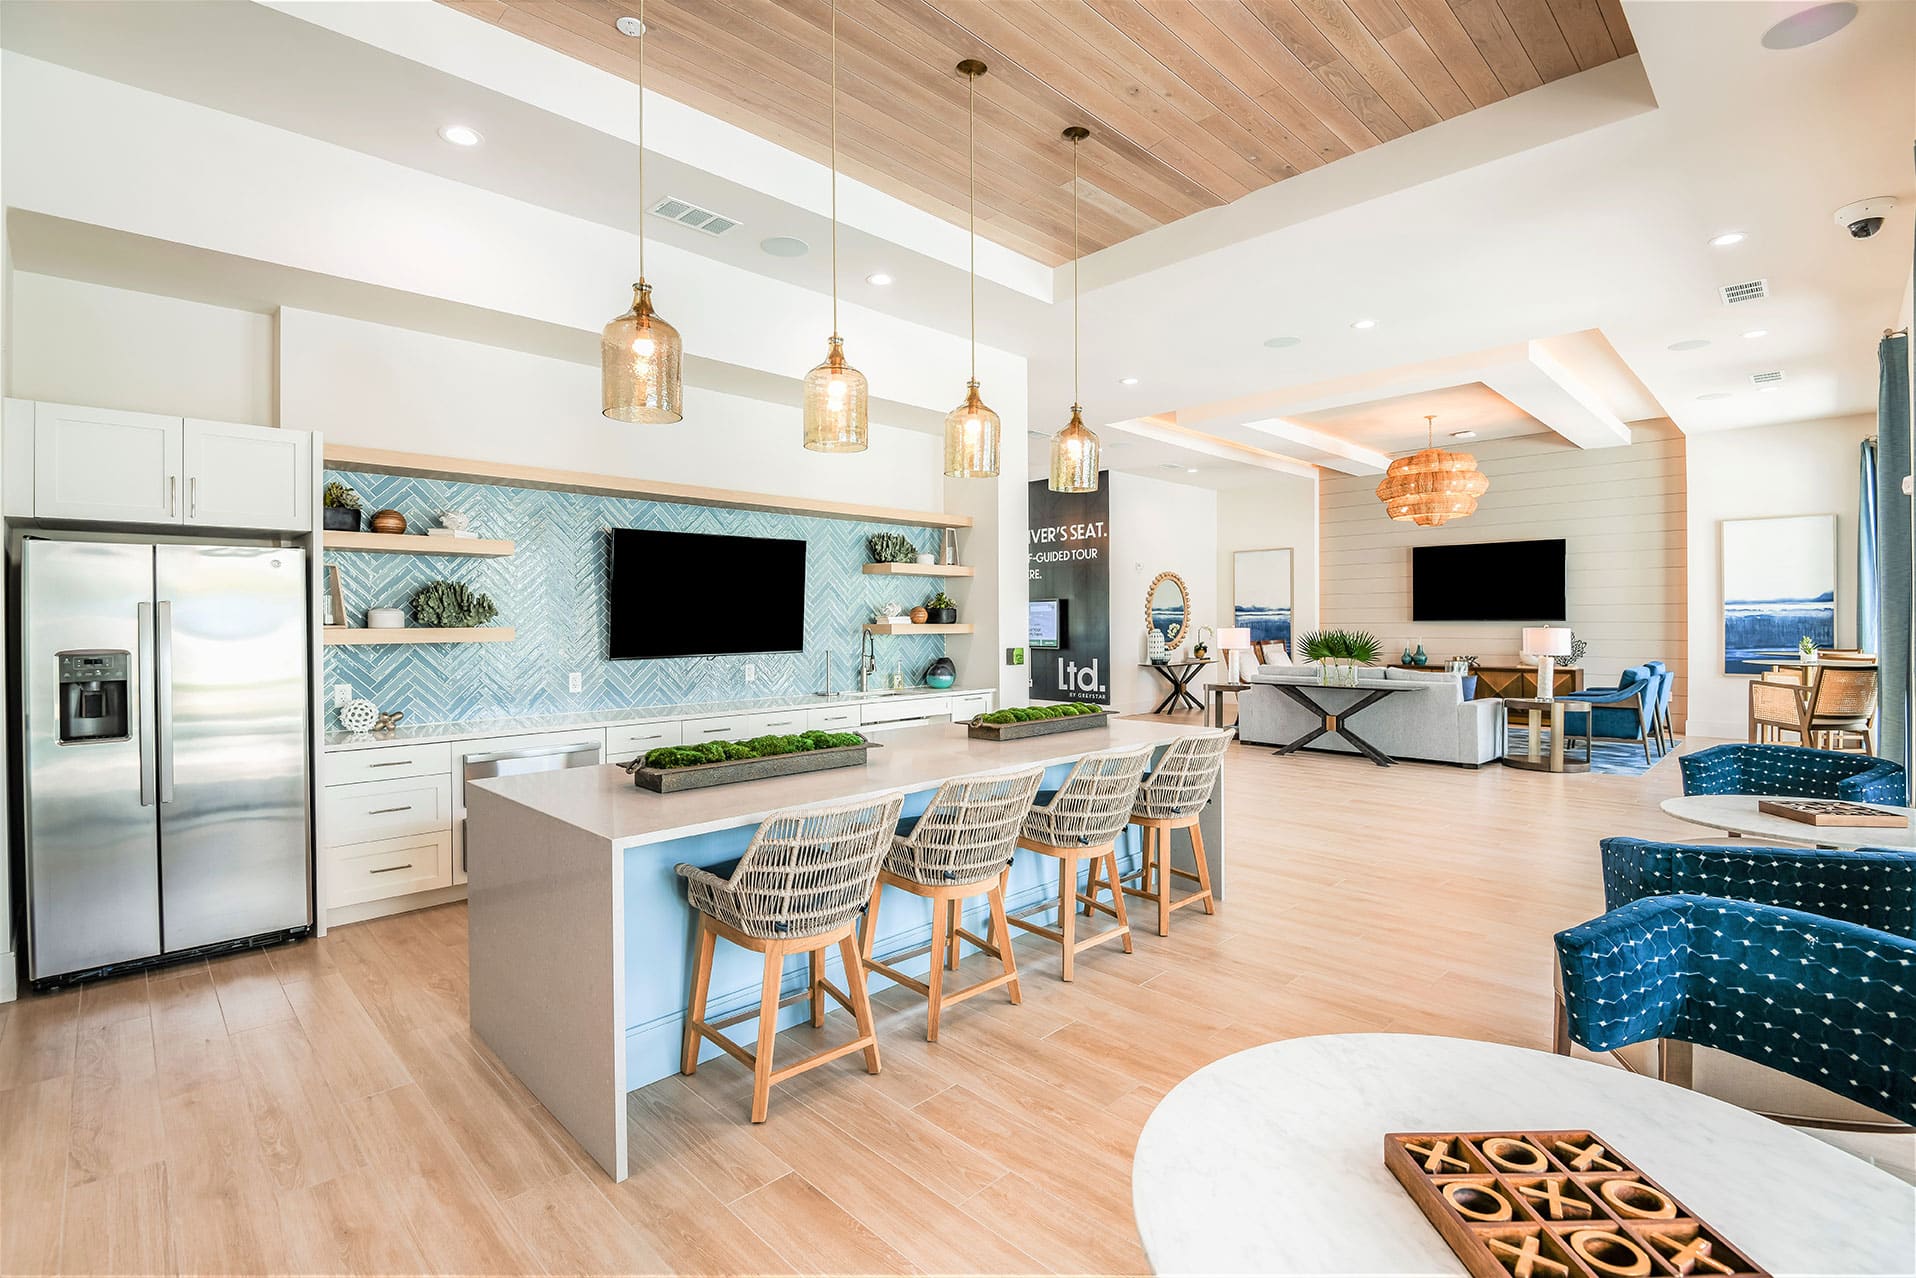 Open-plan kitchenette with blue herringbone backsplash, bar seating, pendant lights, and an adjoining communal lounge area.